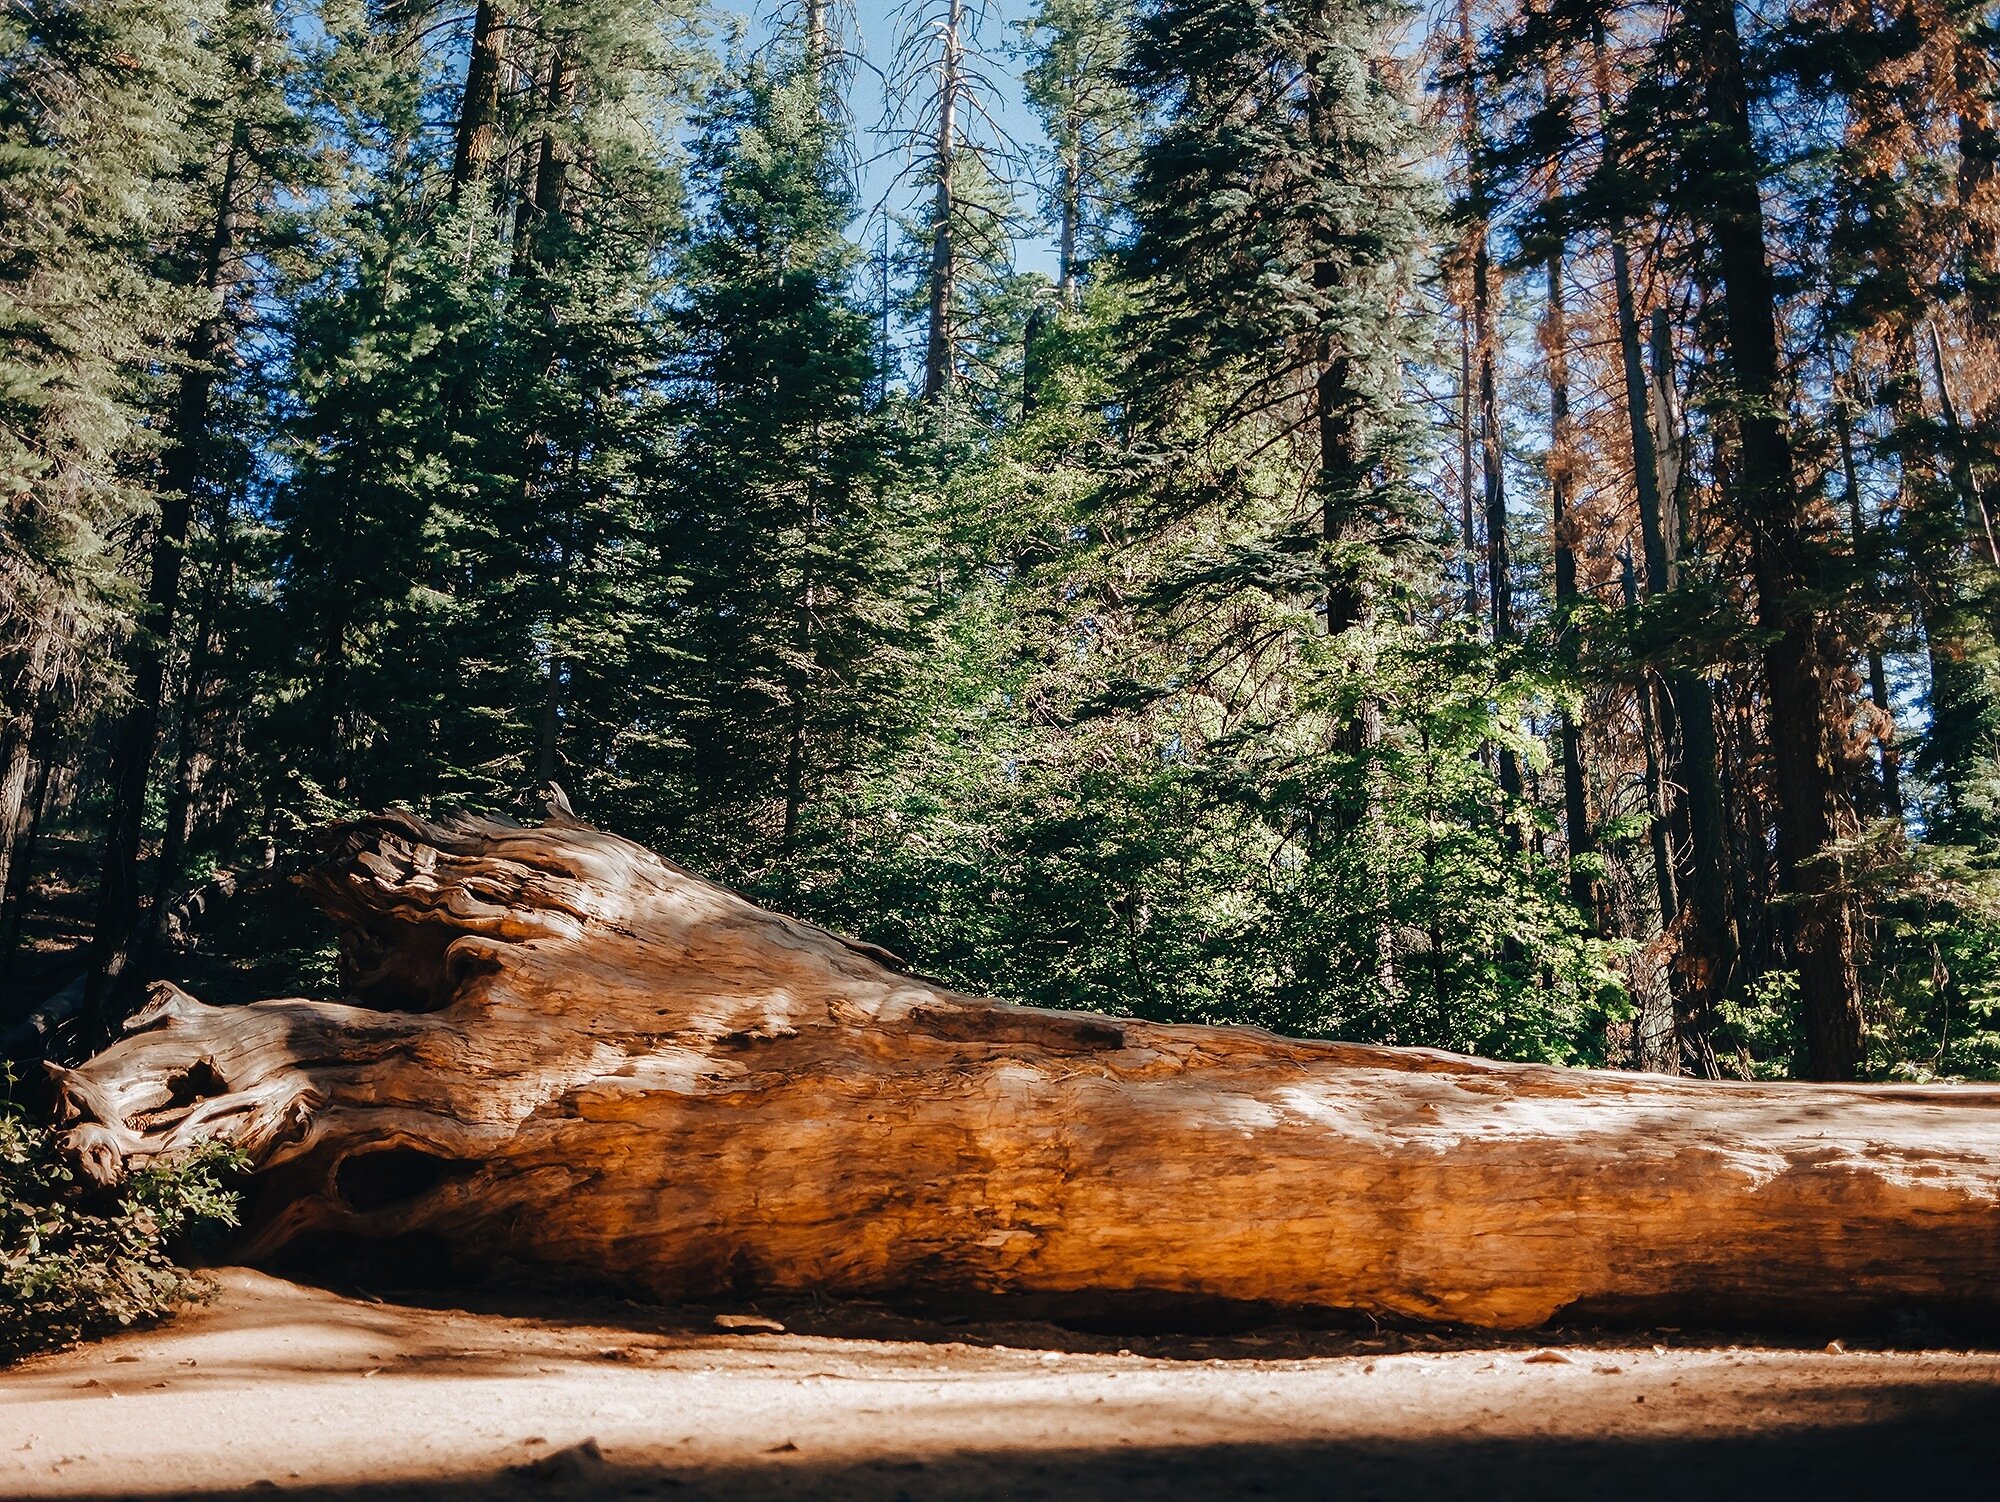 A fallen redwood at Yosemite National Park.